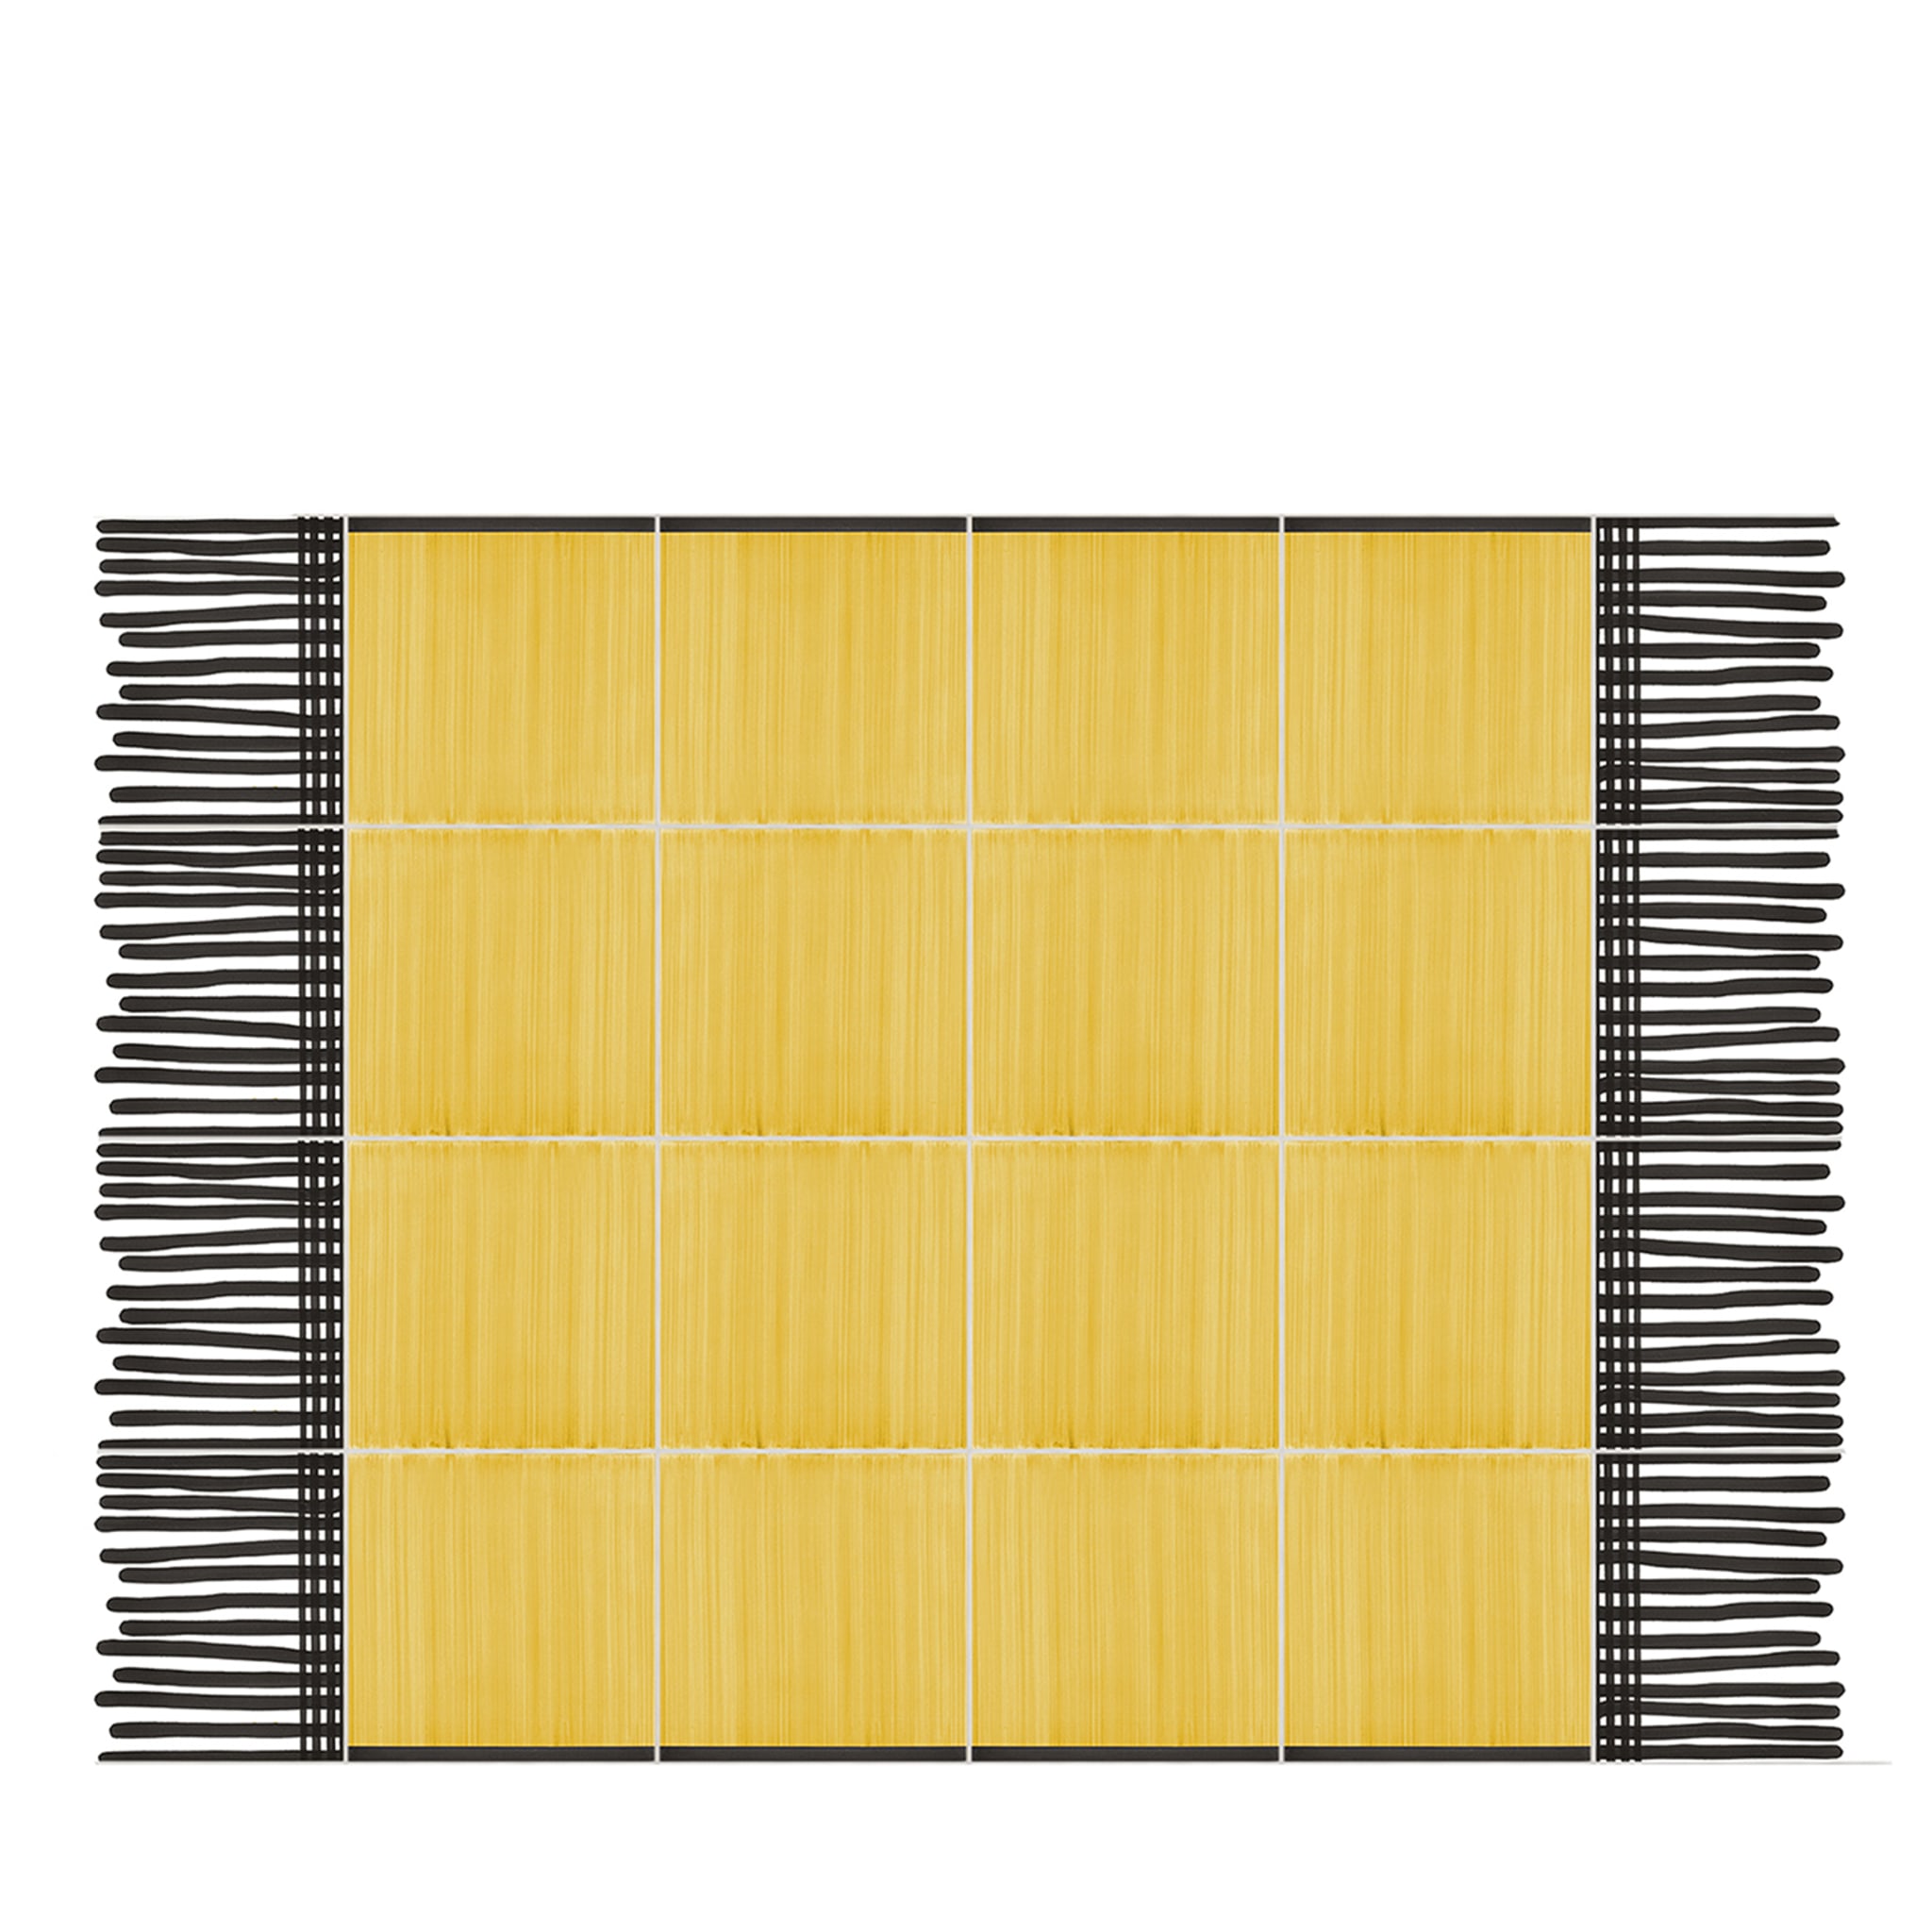 Carpet Total Yellow Ceramic Composition by Giuliano Andrea dell’Uva 120 X 80 with black border - Main view